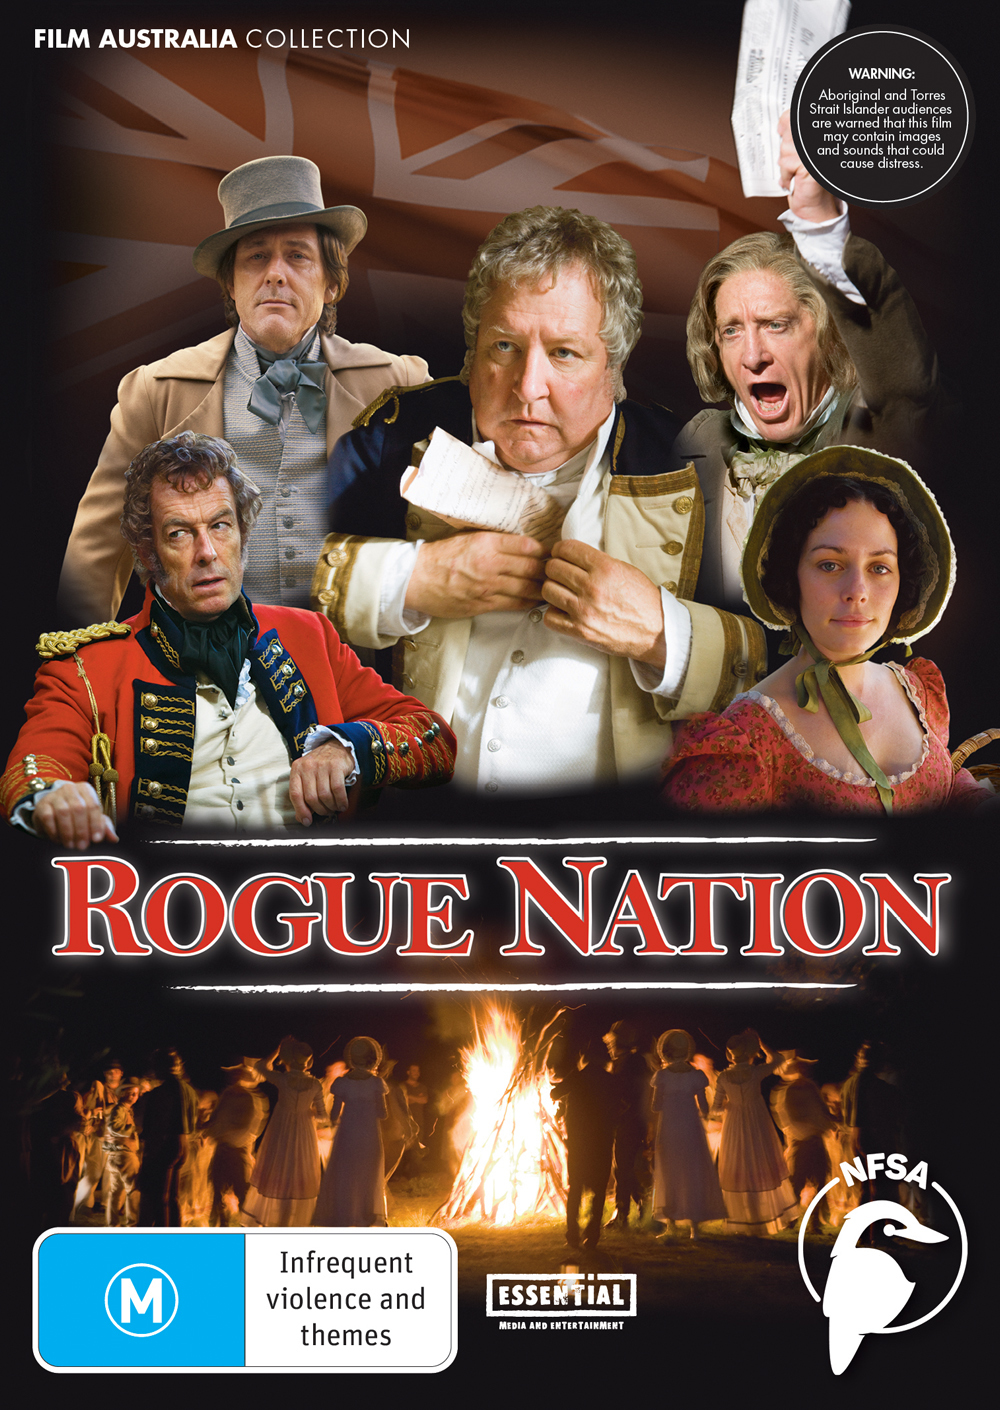 Rogue Nation - Australia